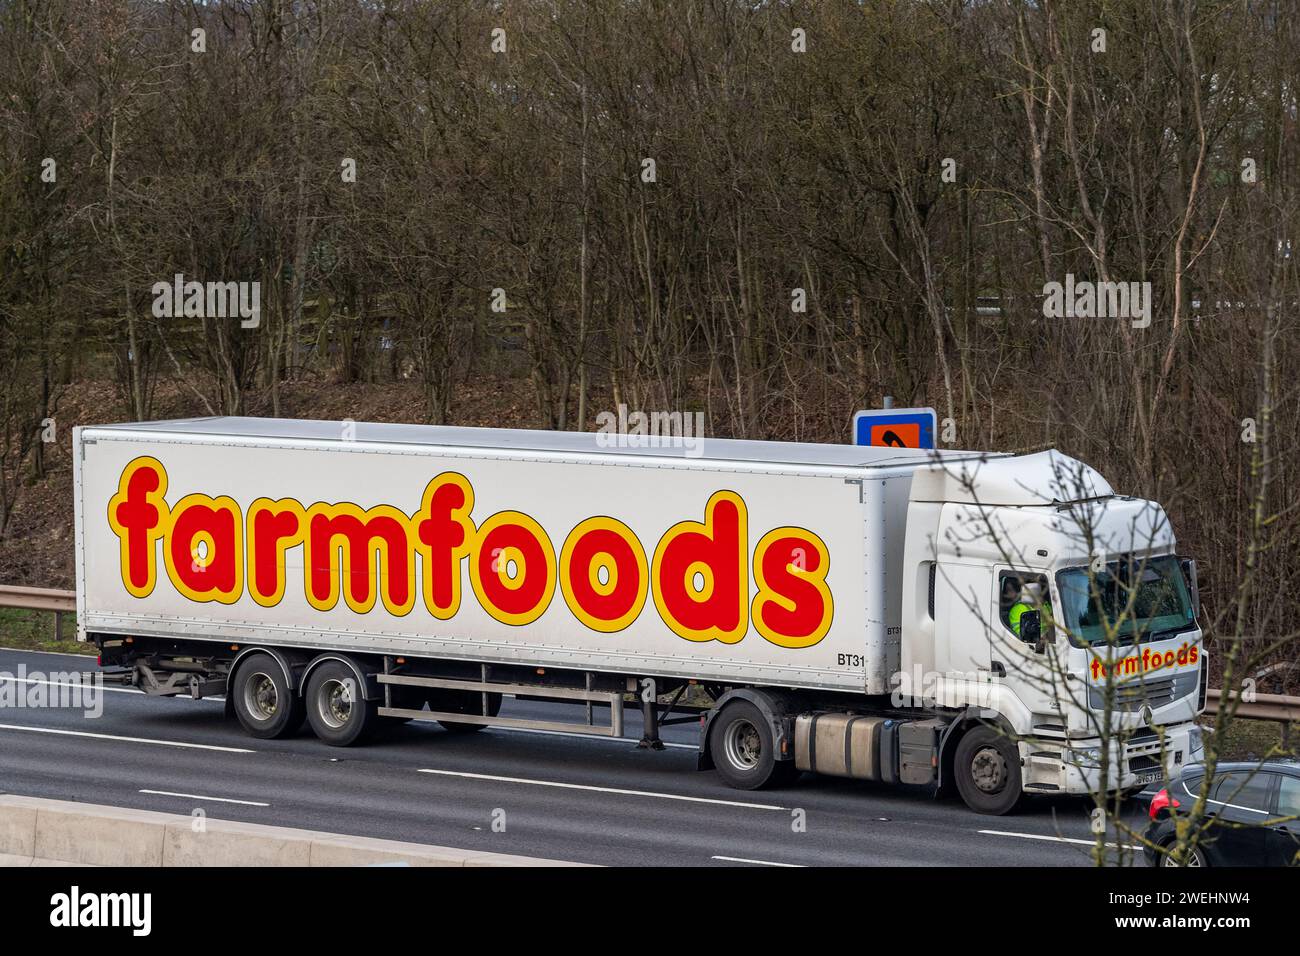 Farmfoods Truck/Lorry heading south on the M6 motorway near Birmingham, UK. Stock Photo